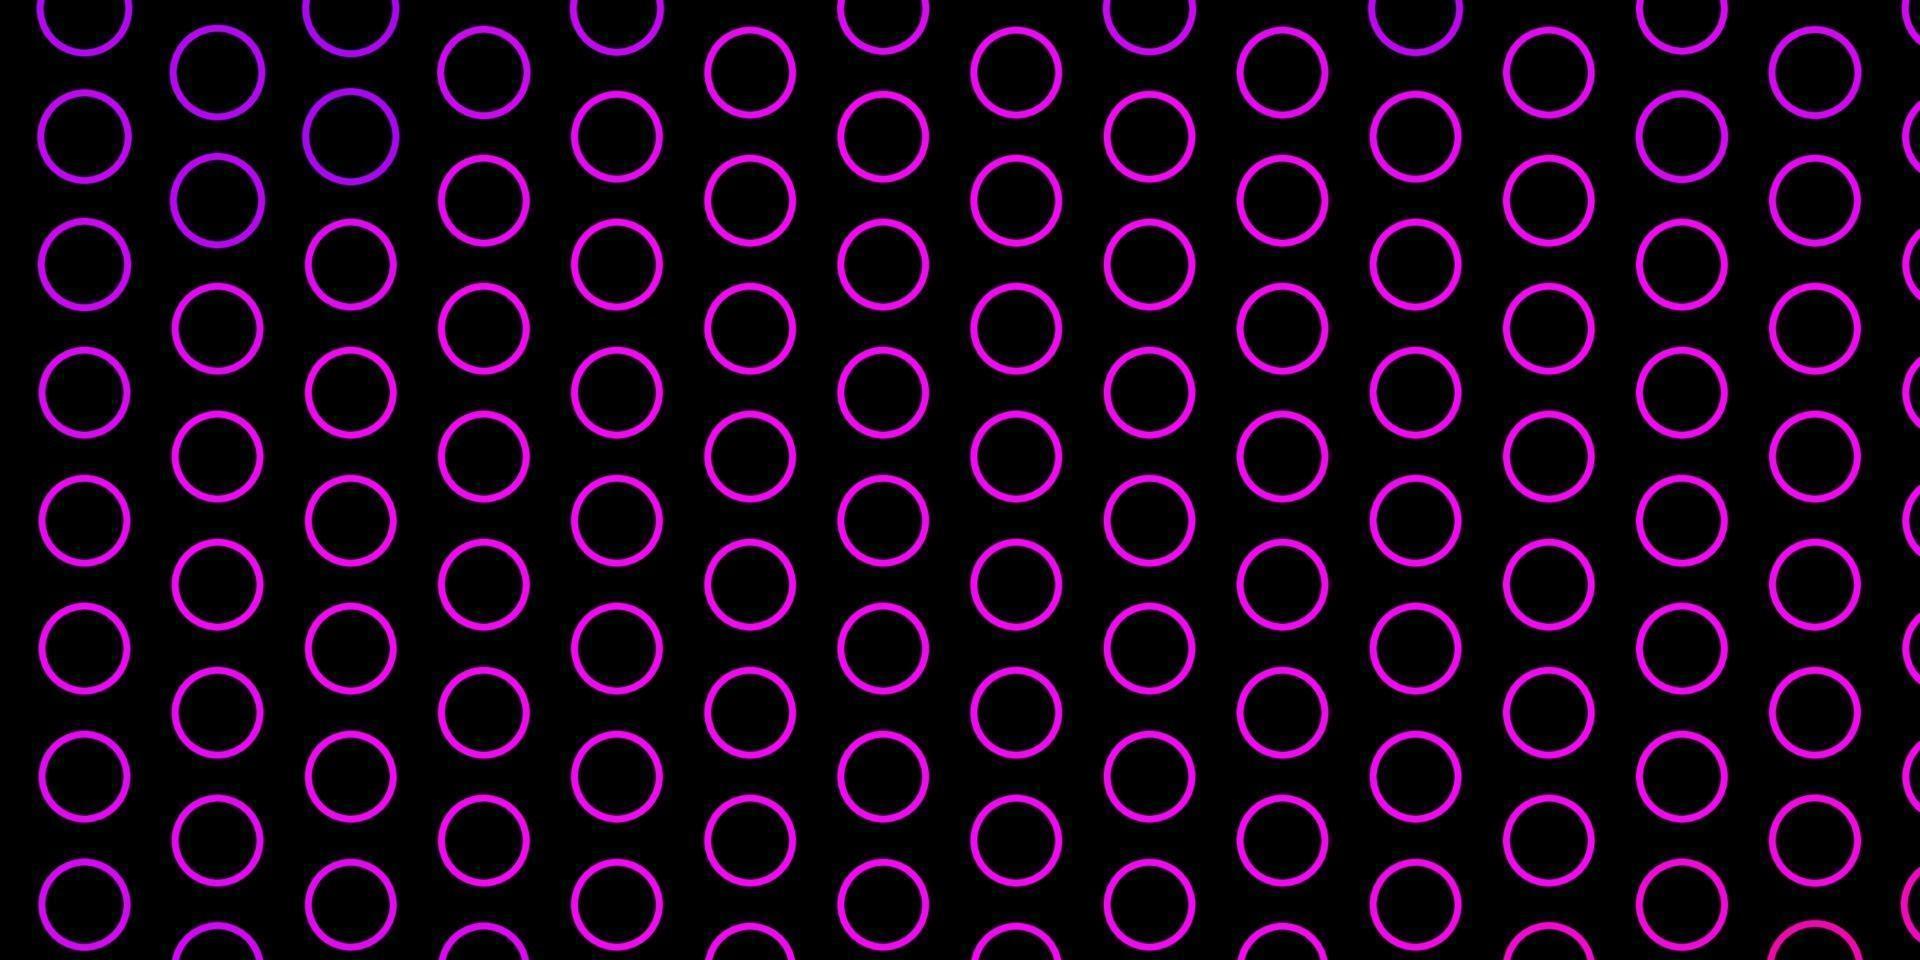 pano de fundo vector roxo, rosa escuro com círculos.